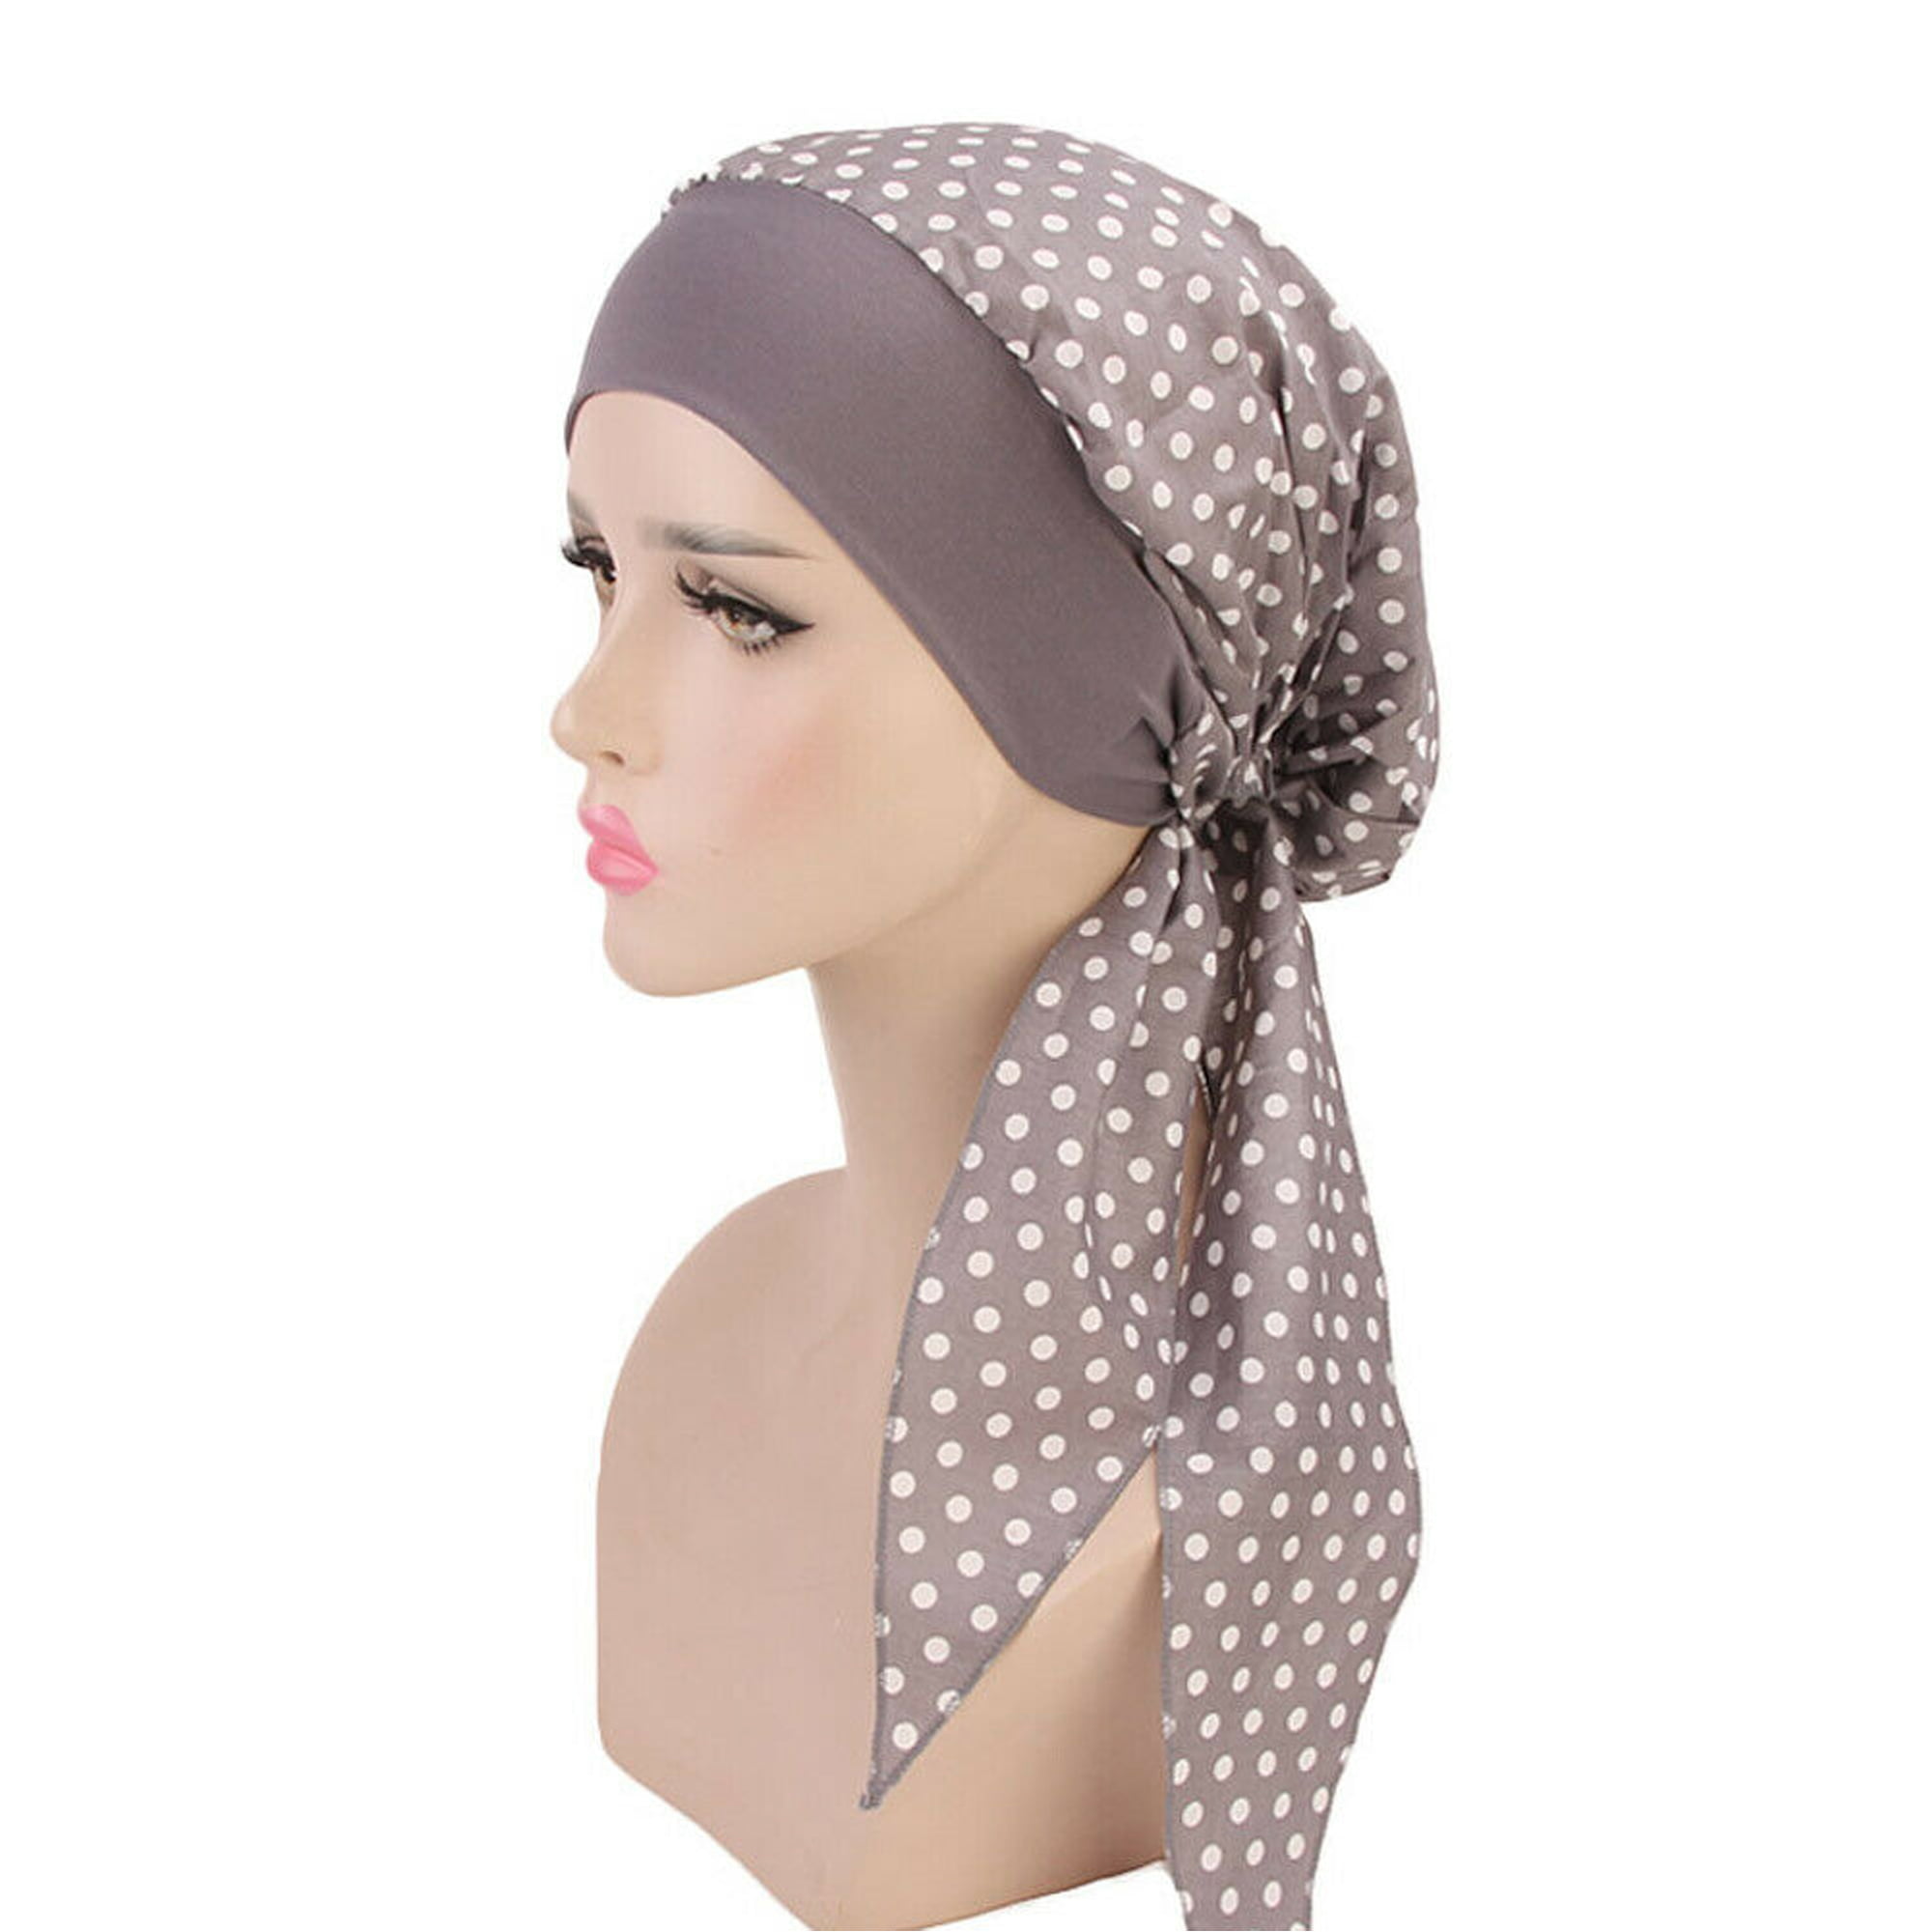 Muslim Women Hijab Long Tail Turban Cancer Chemo Cap Islamic Printed Headscarf